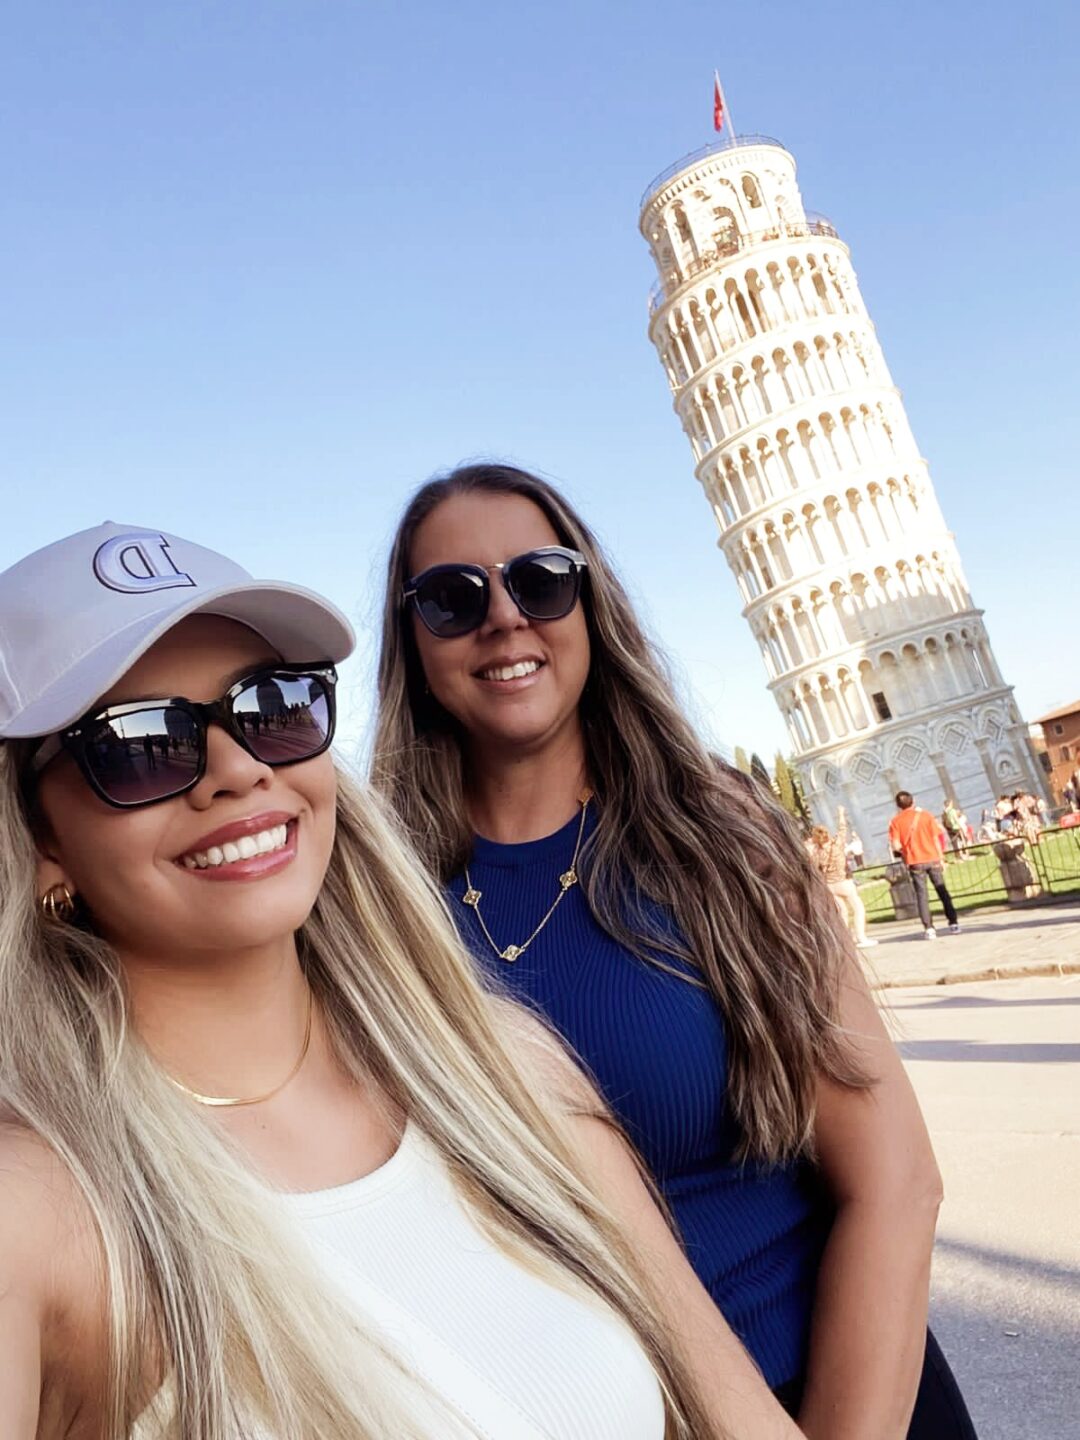 Na famosa torre de Pisa